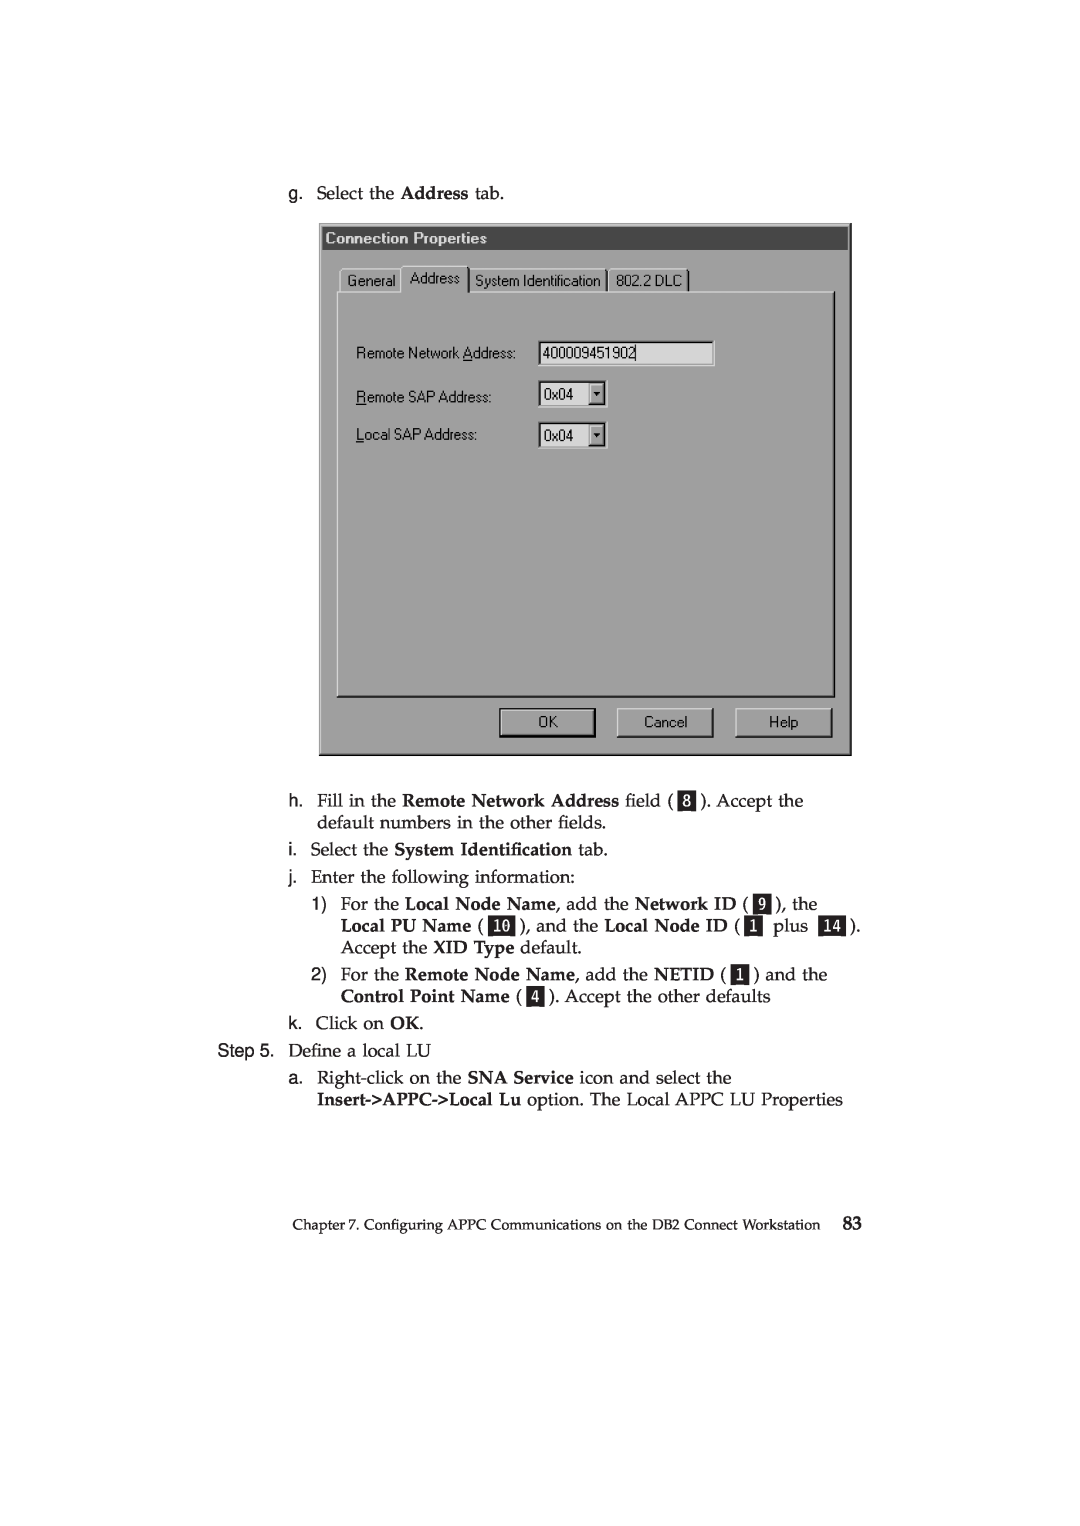 IBM GC09-2830-00 manual i. Select the System Identication tab 